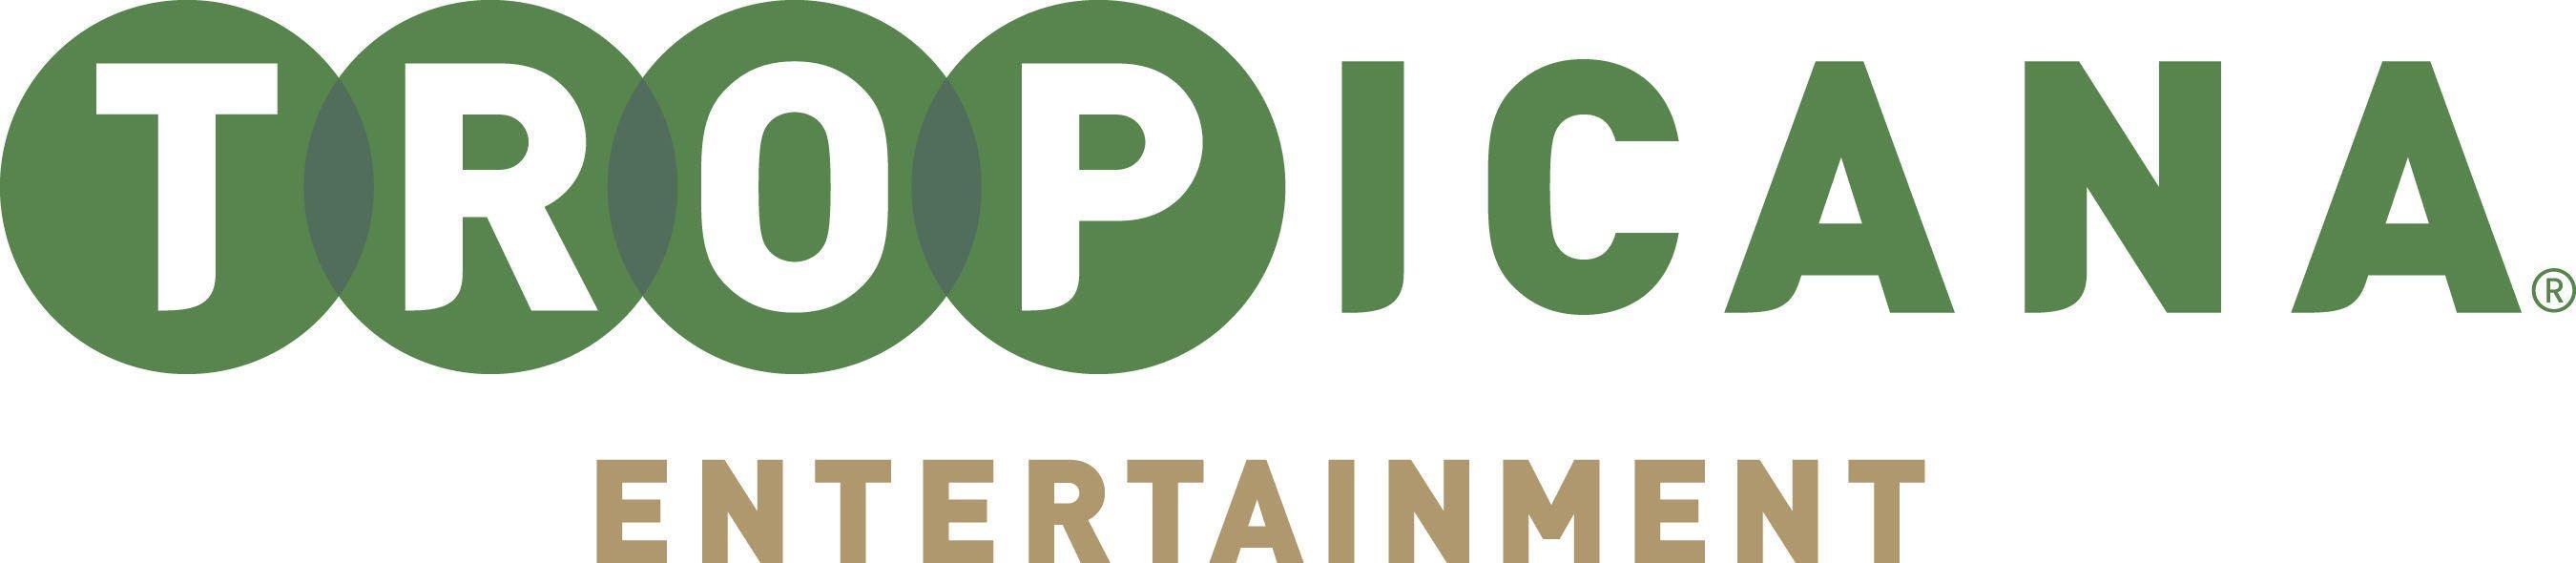 Tropicana Logo - Tropicana Entertainment and Trump Taj Mahal Associates Enter into